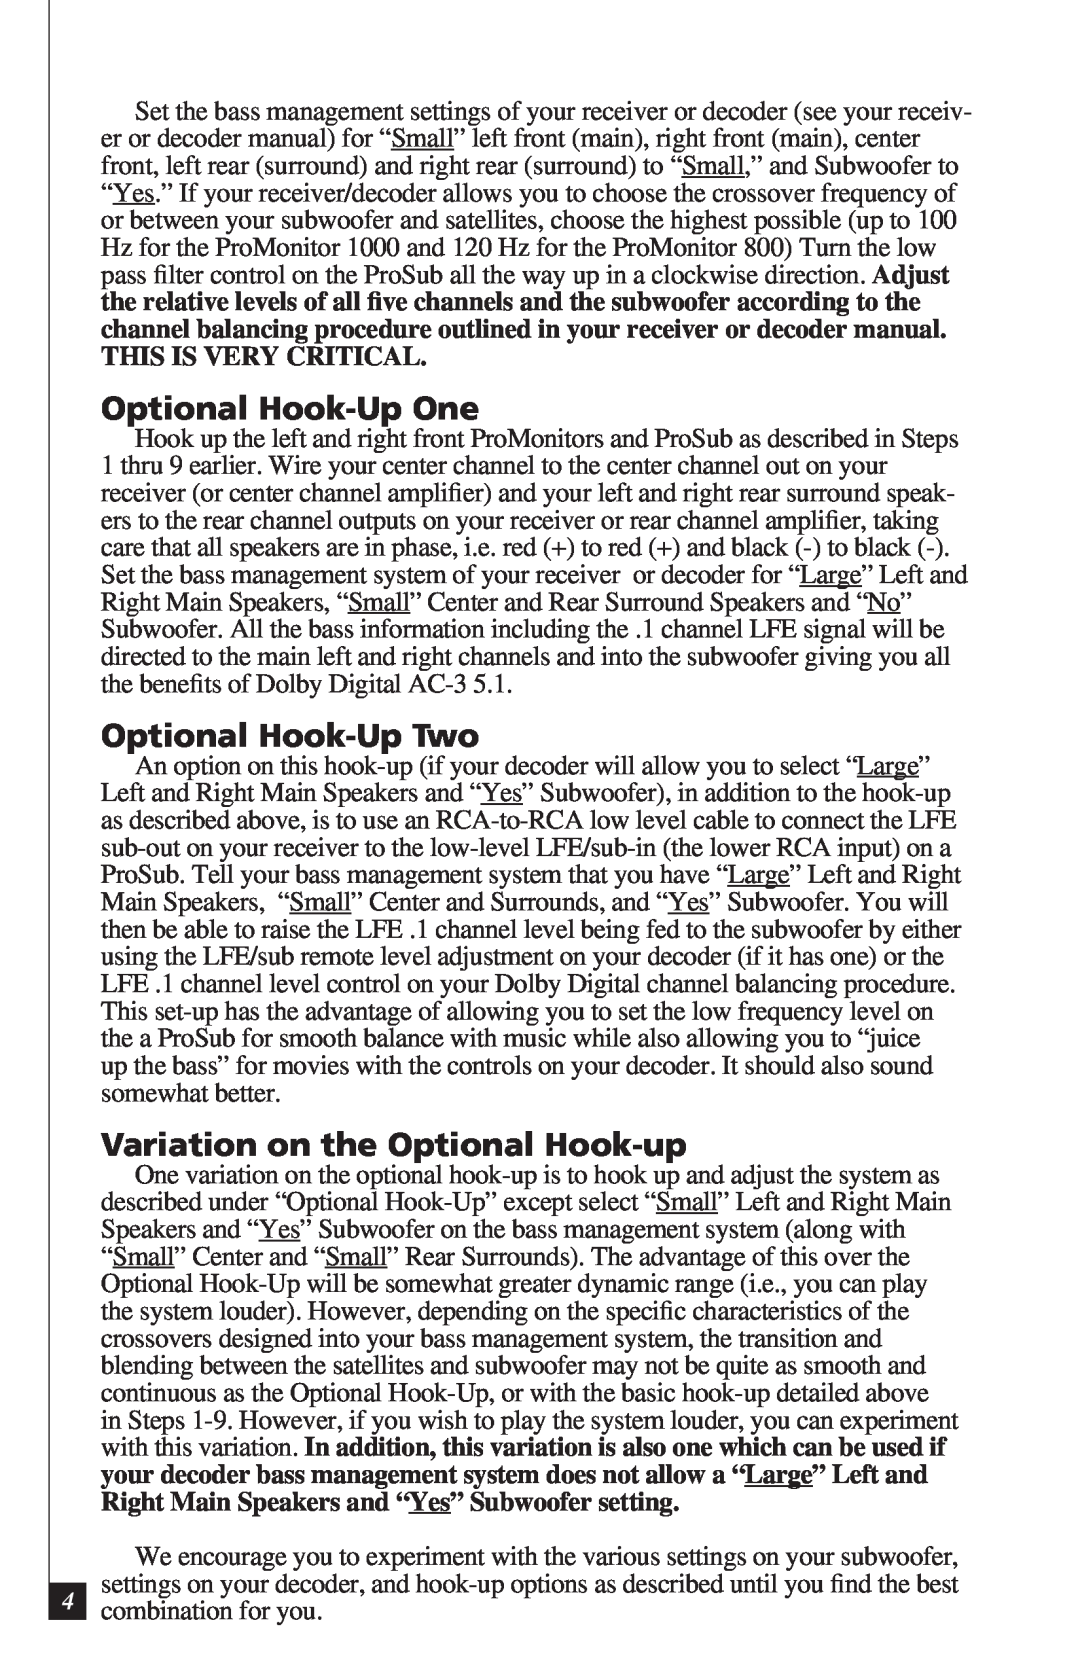 Definitive Technology 1000 owner manual Optional Hook-UpOne, Optional Hook-UpTwo, Variation on the Optional Hook-up 